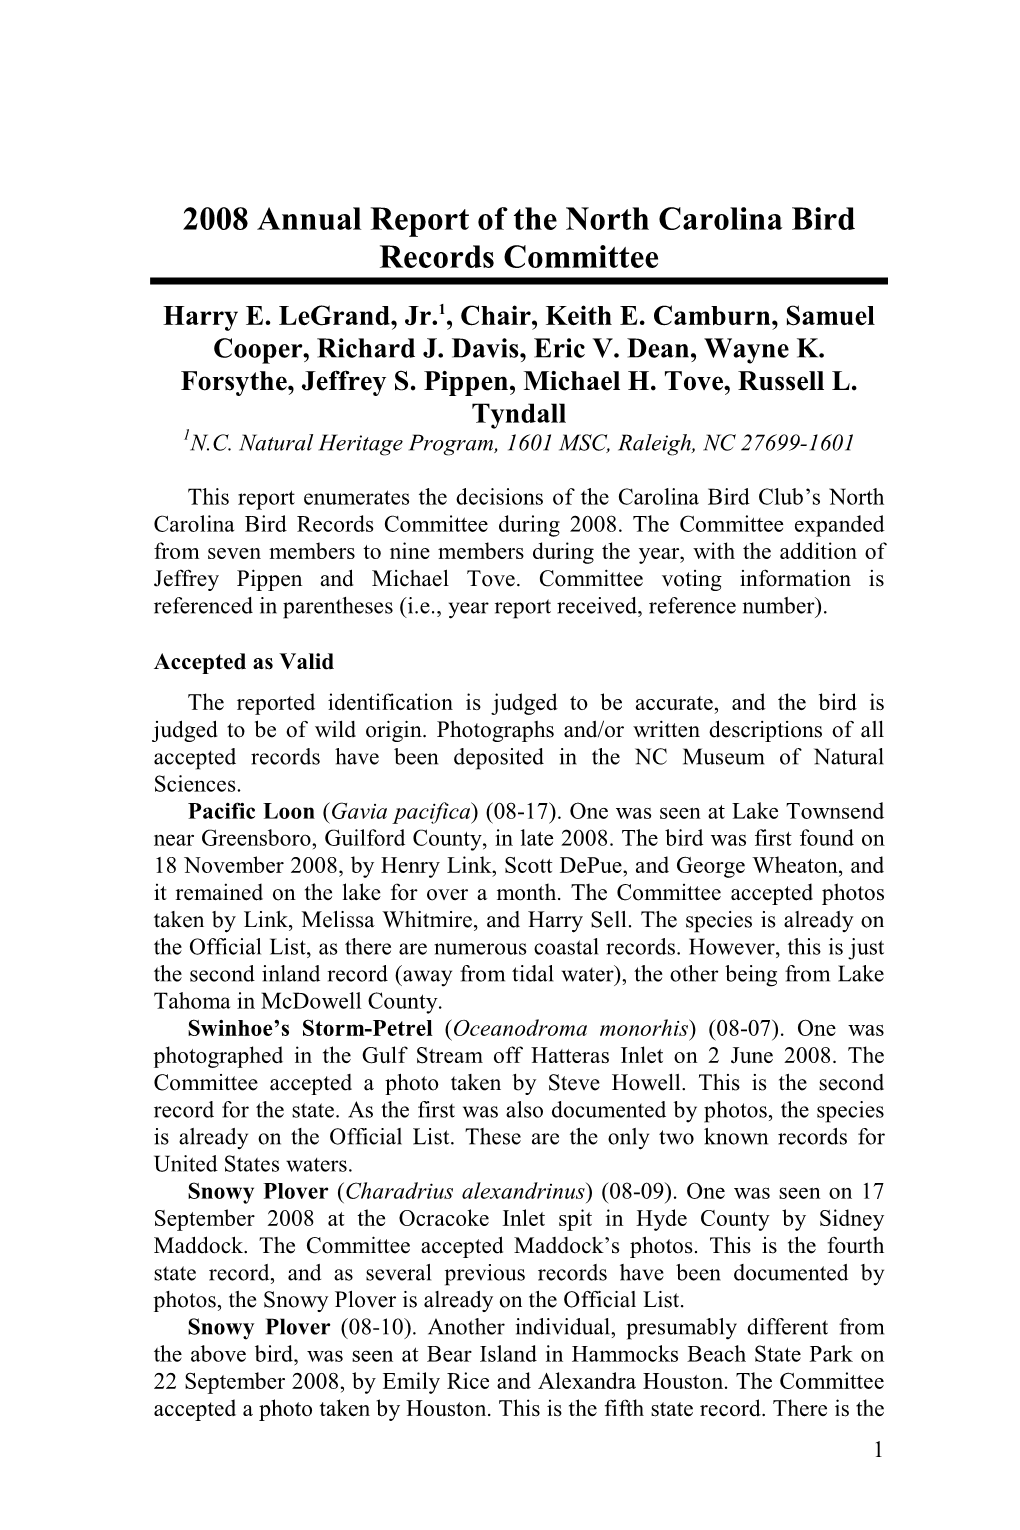 2008 Annual Report of the North Carolina Bird Records Committee Harry E